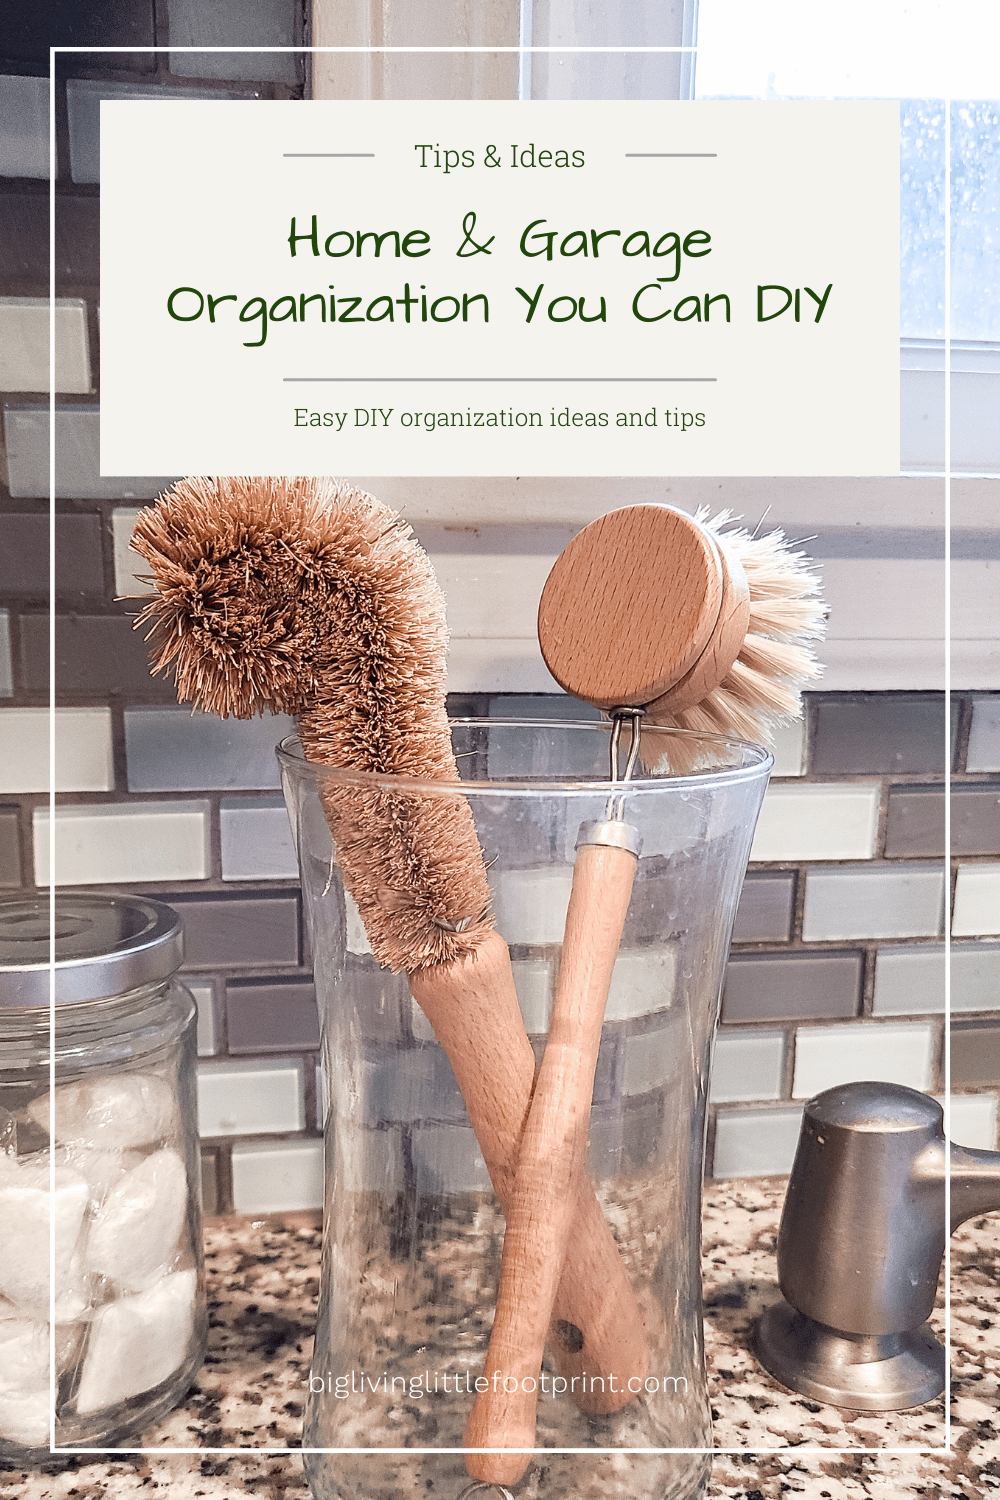 DIY organization ideas - a glass vase as a dish brush holder